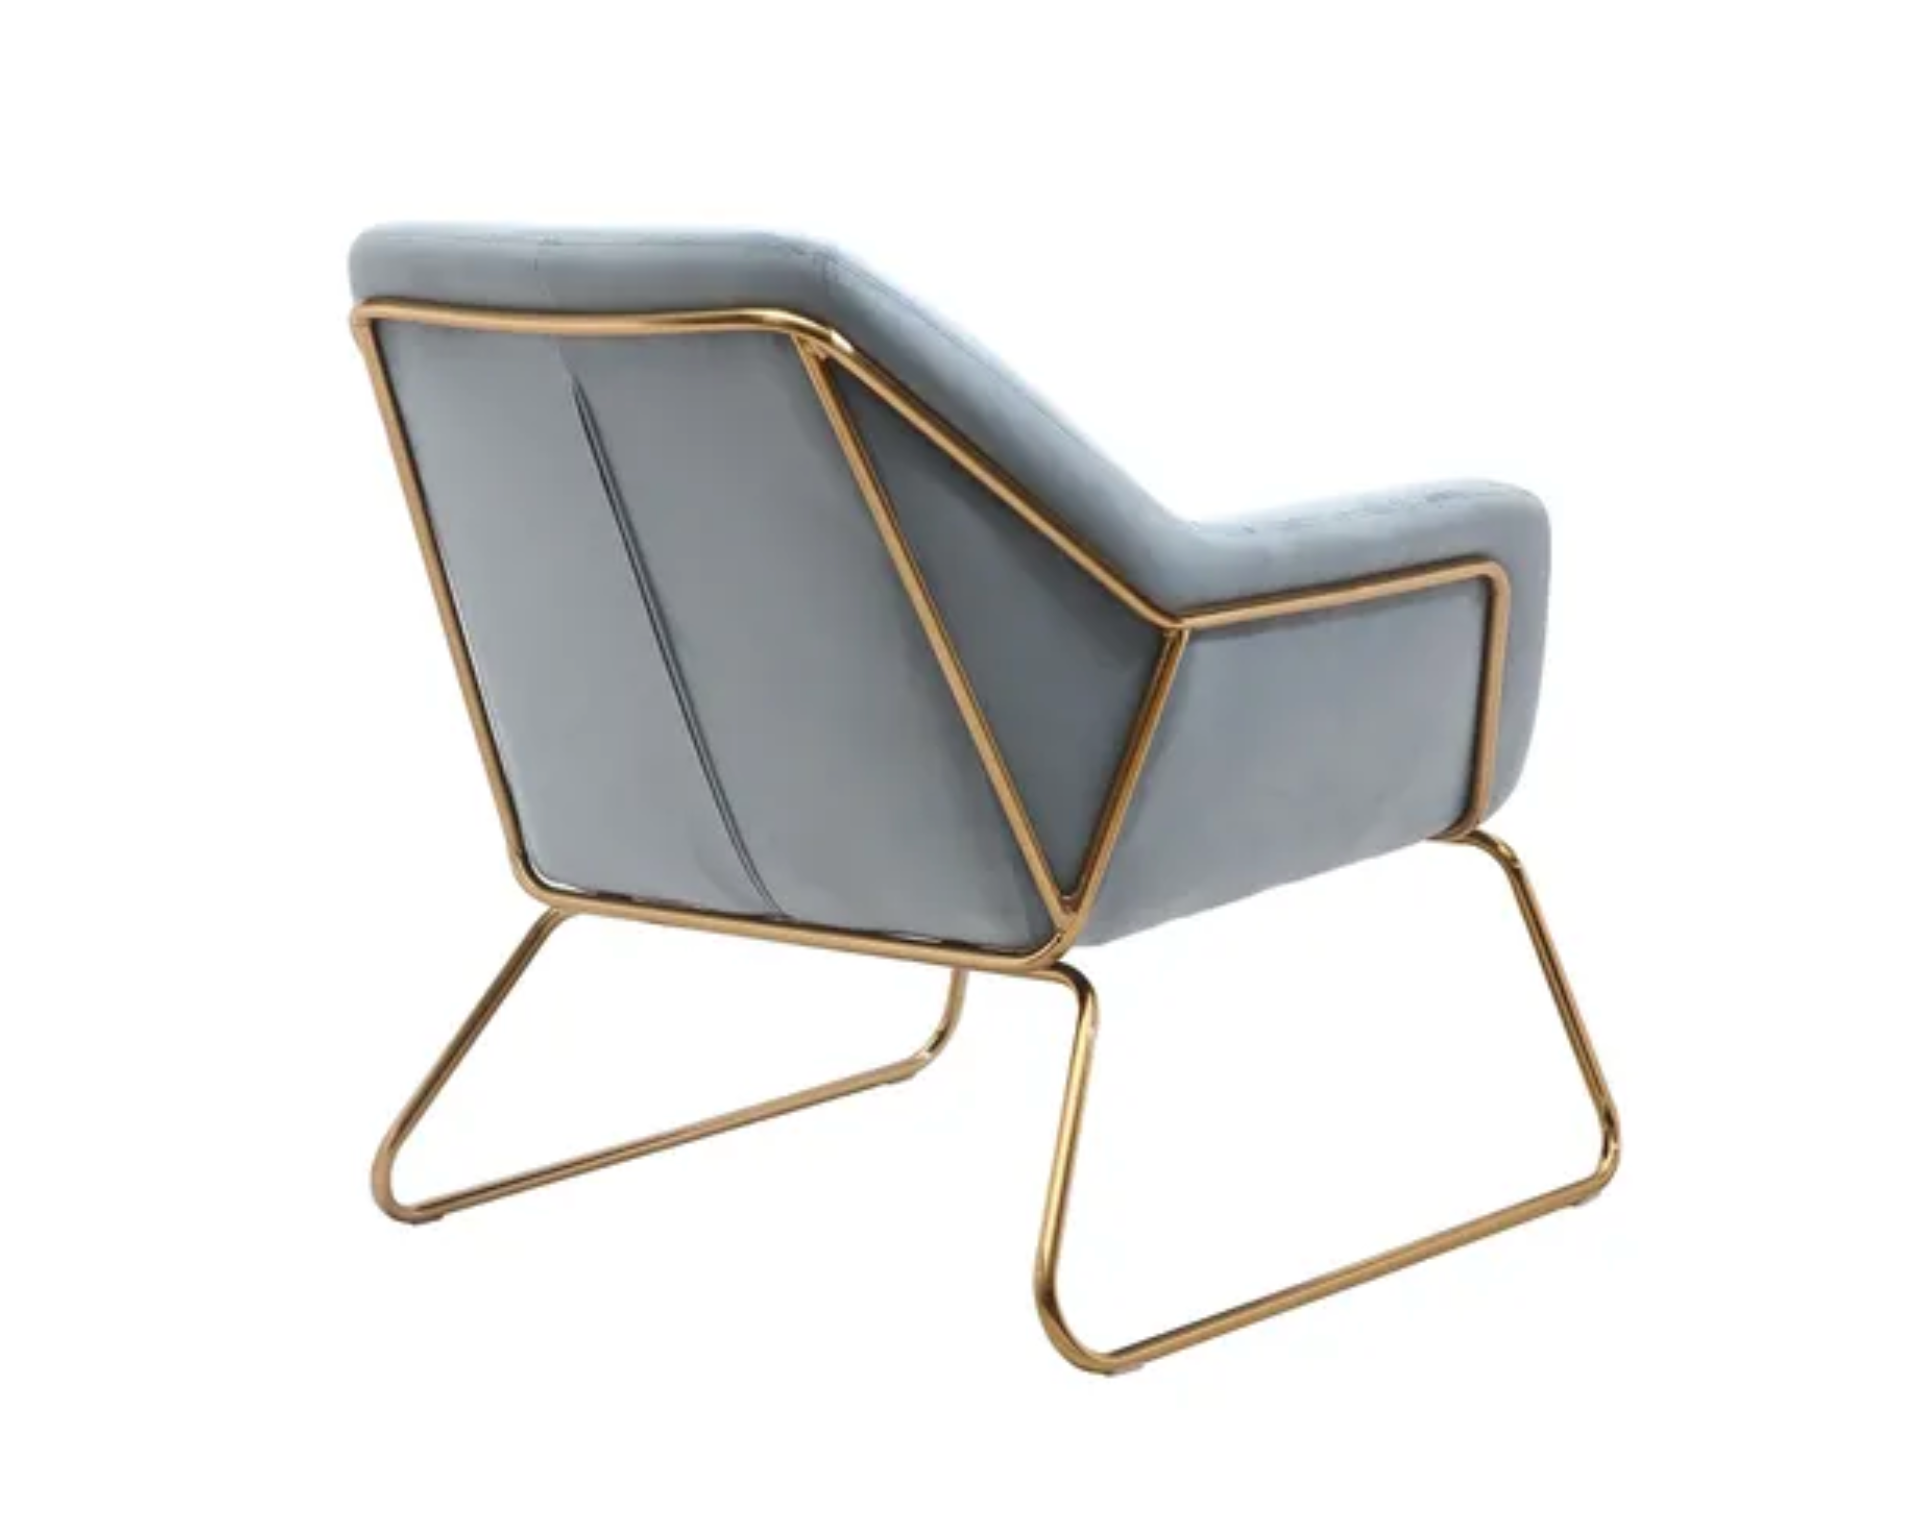 Light blue armchair with gold legs 76 × 79 × 60 cm